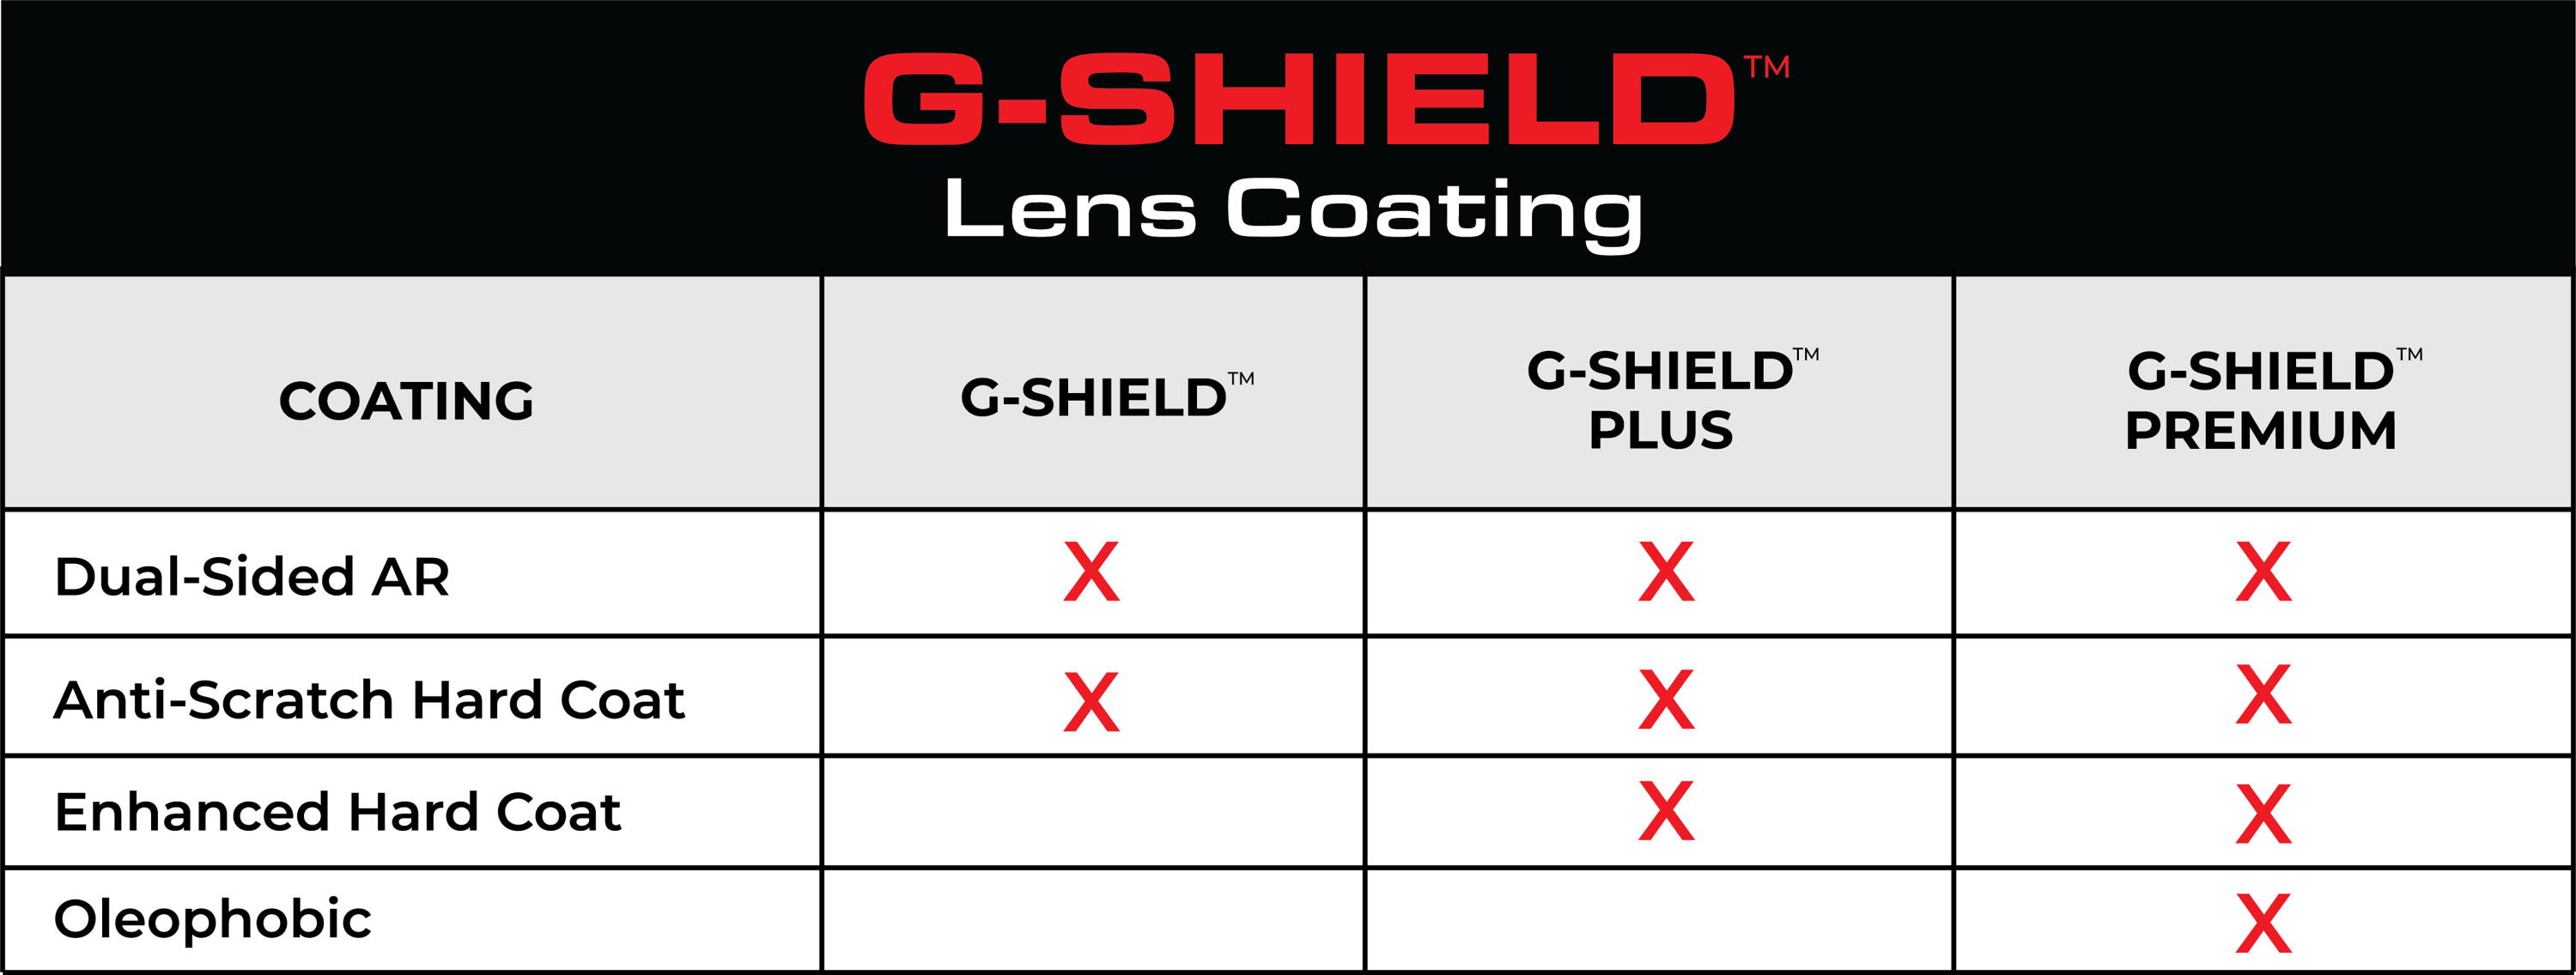 G-shield lens coating